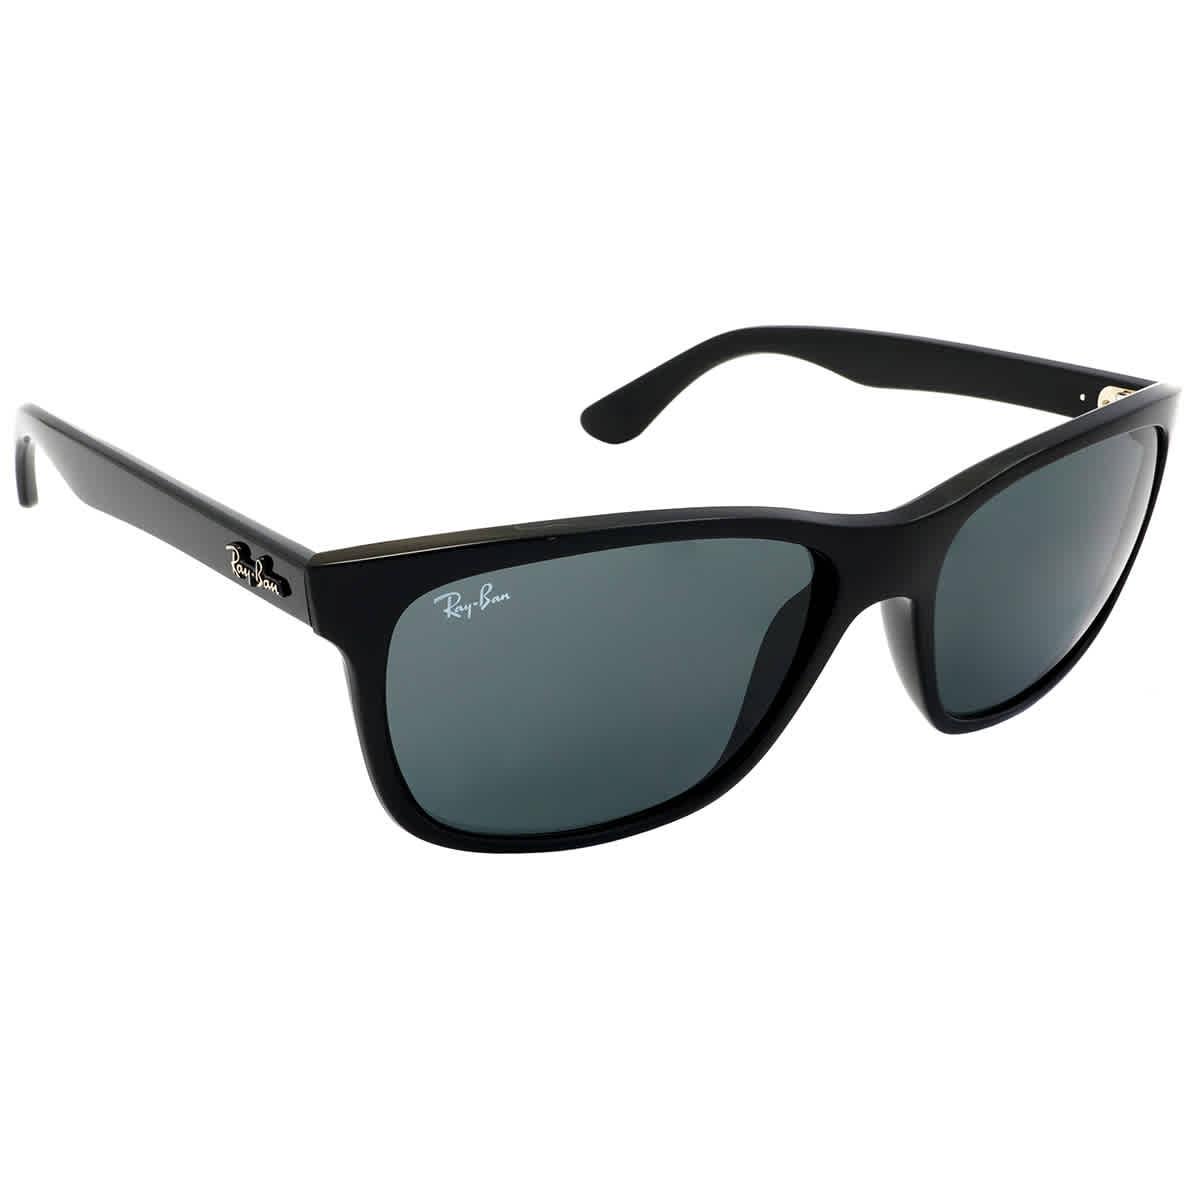 Round Black Grey Square Sunglasses for Men